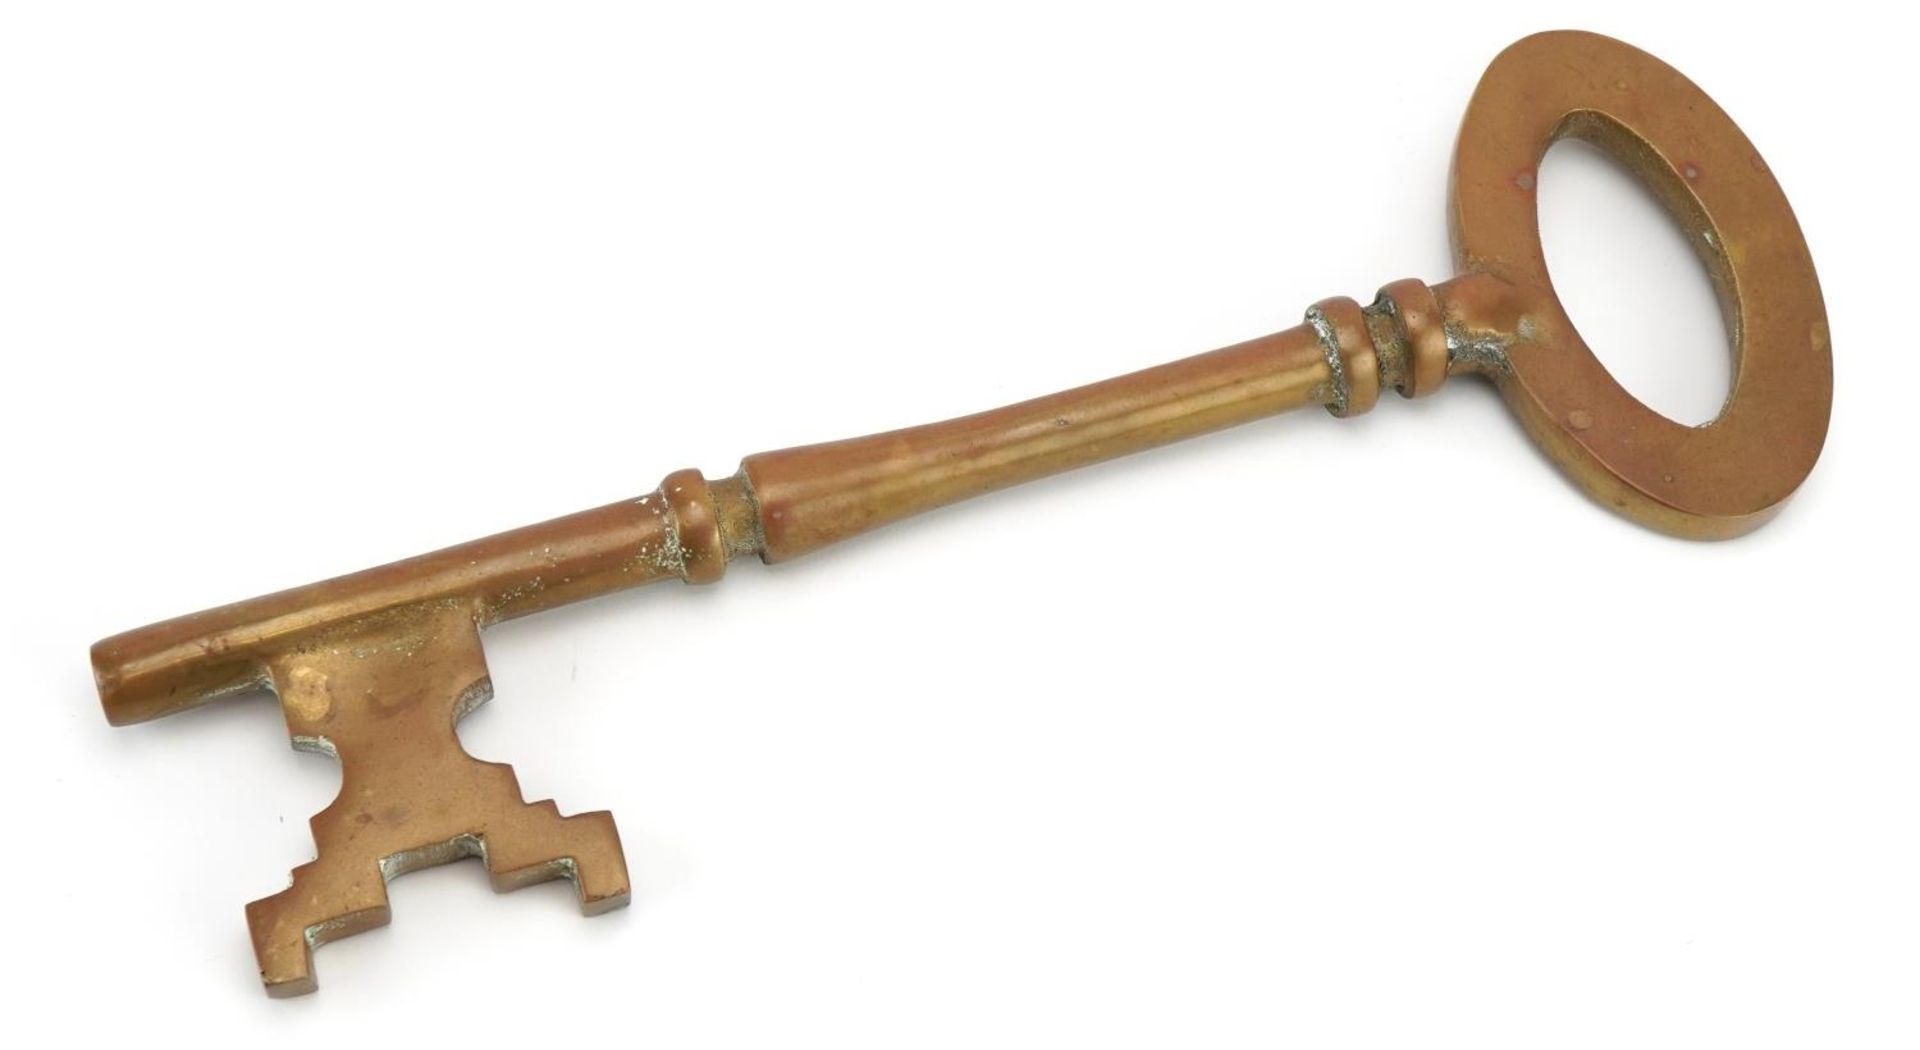 Oversized brass key, 36cm in length